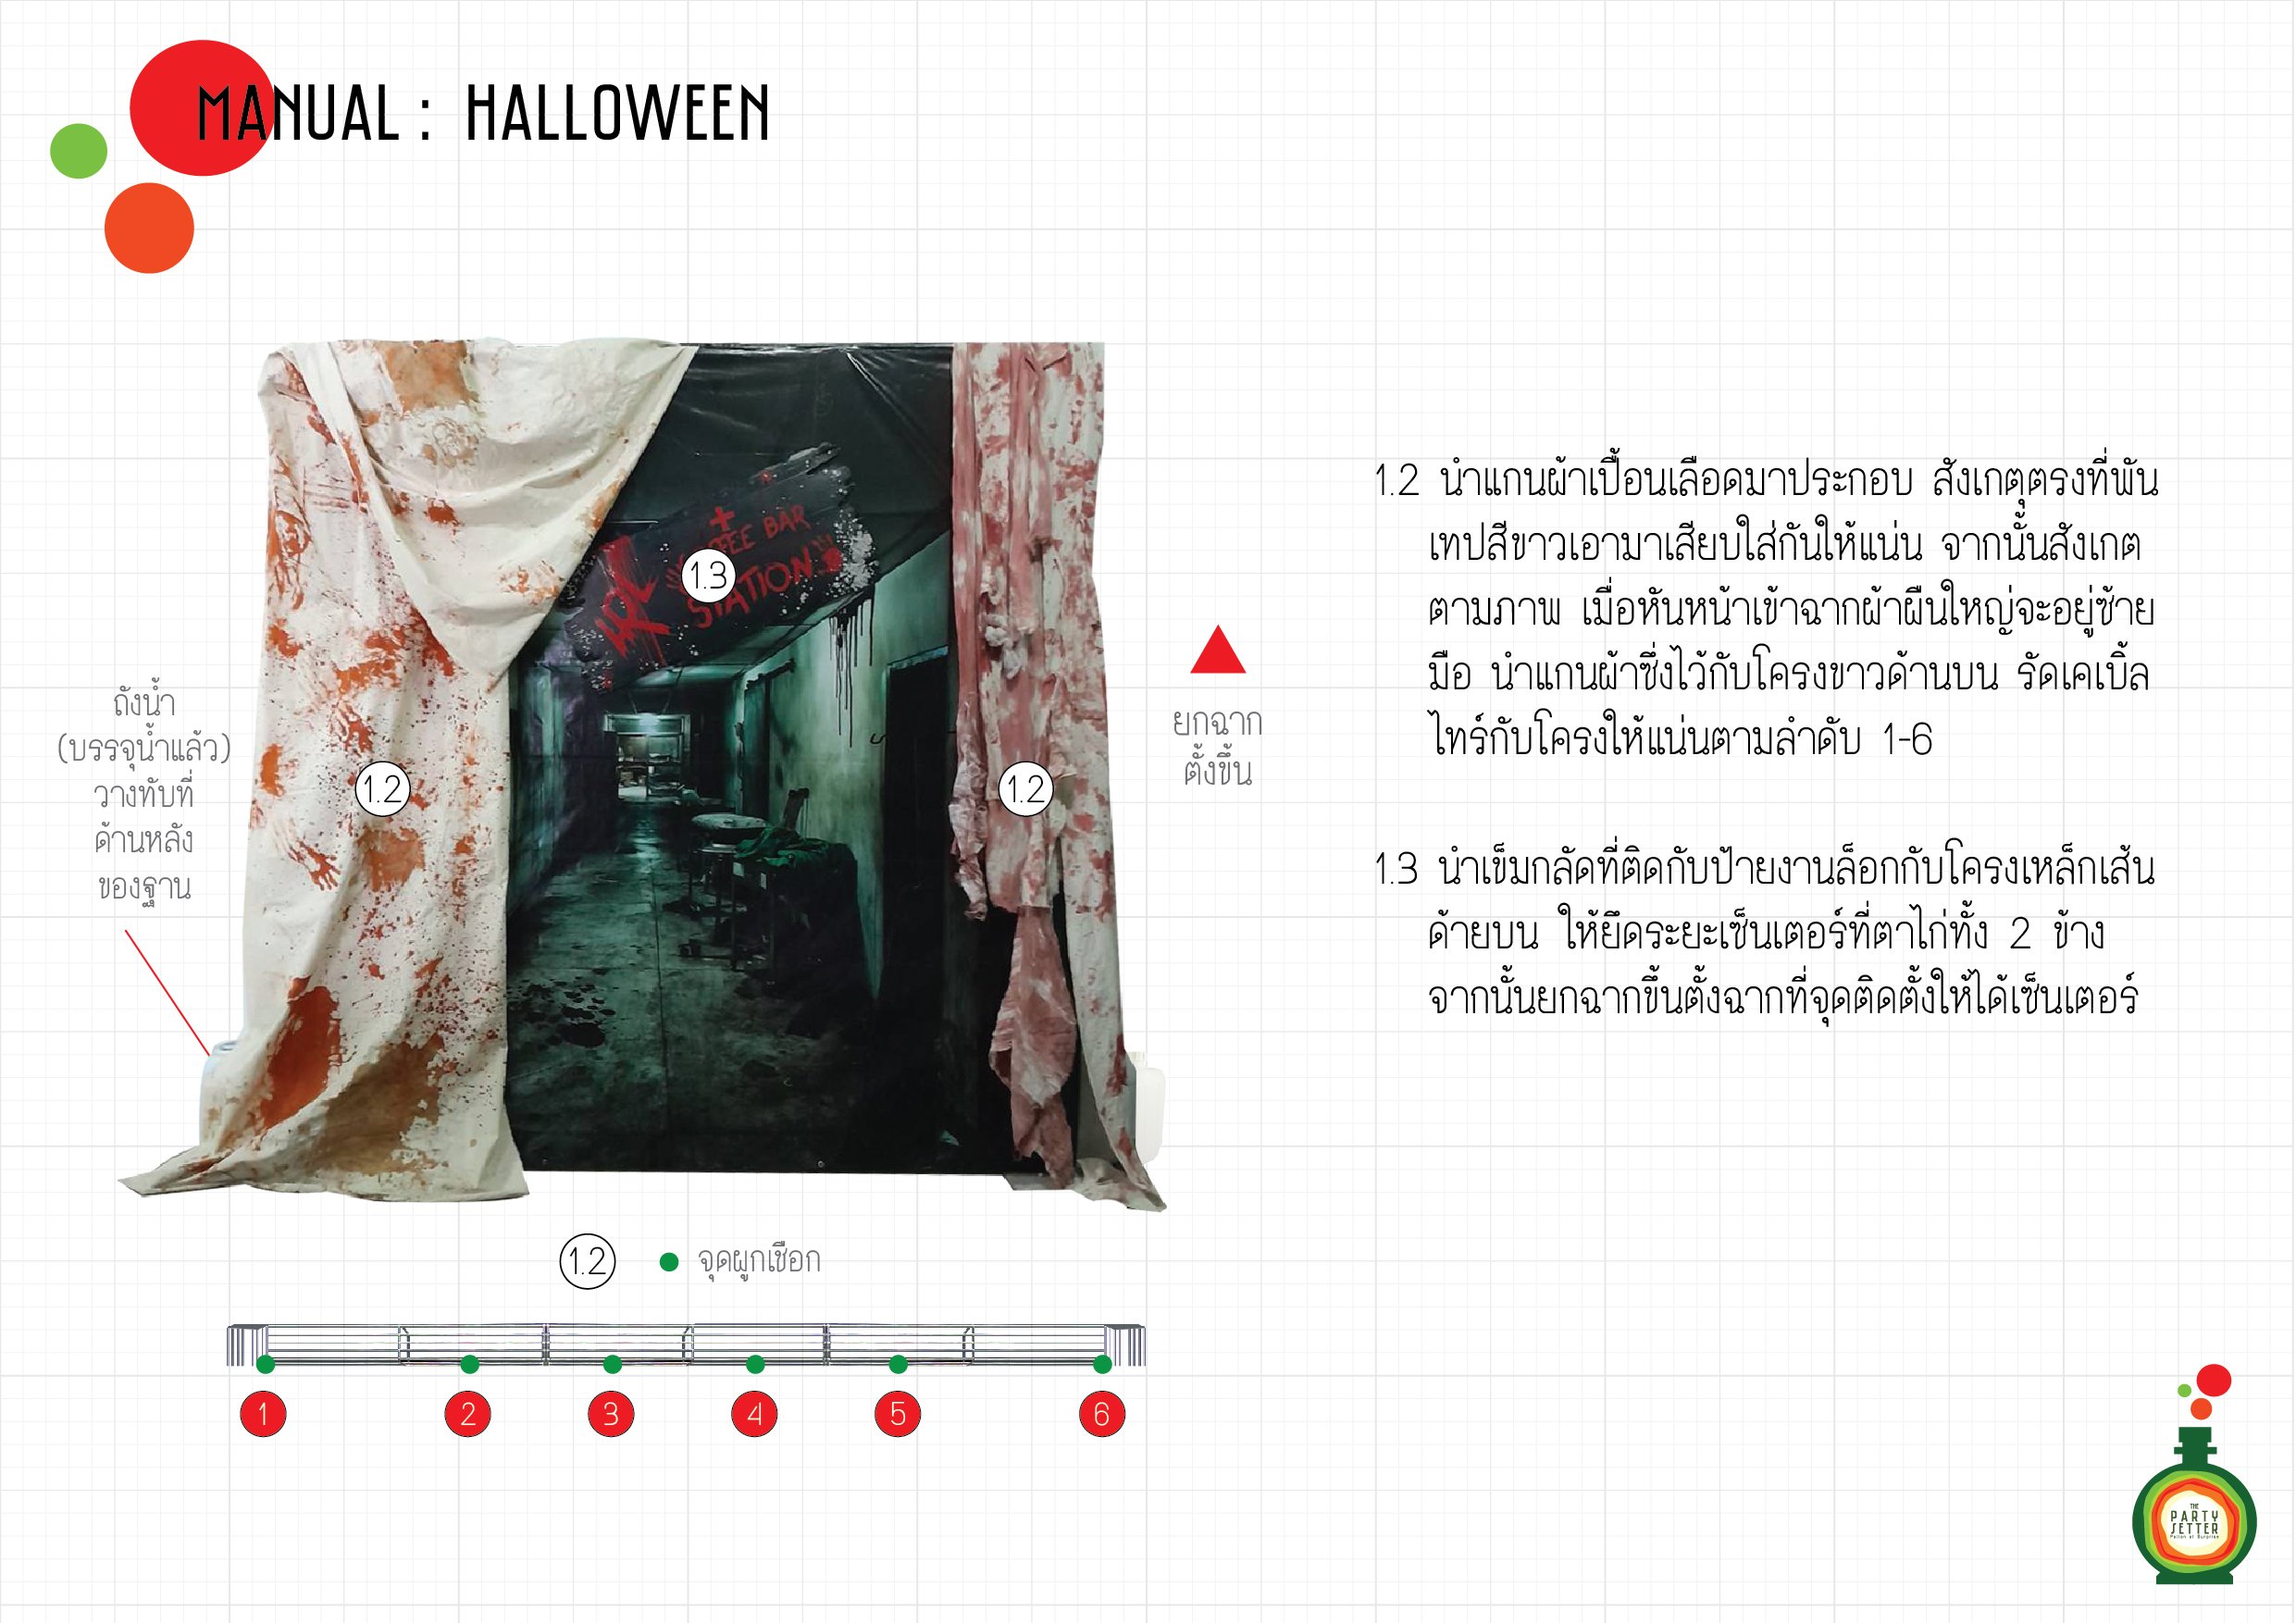 Manual_Halloween_14-1.2-01.jpg